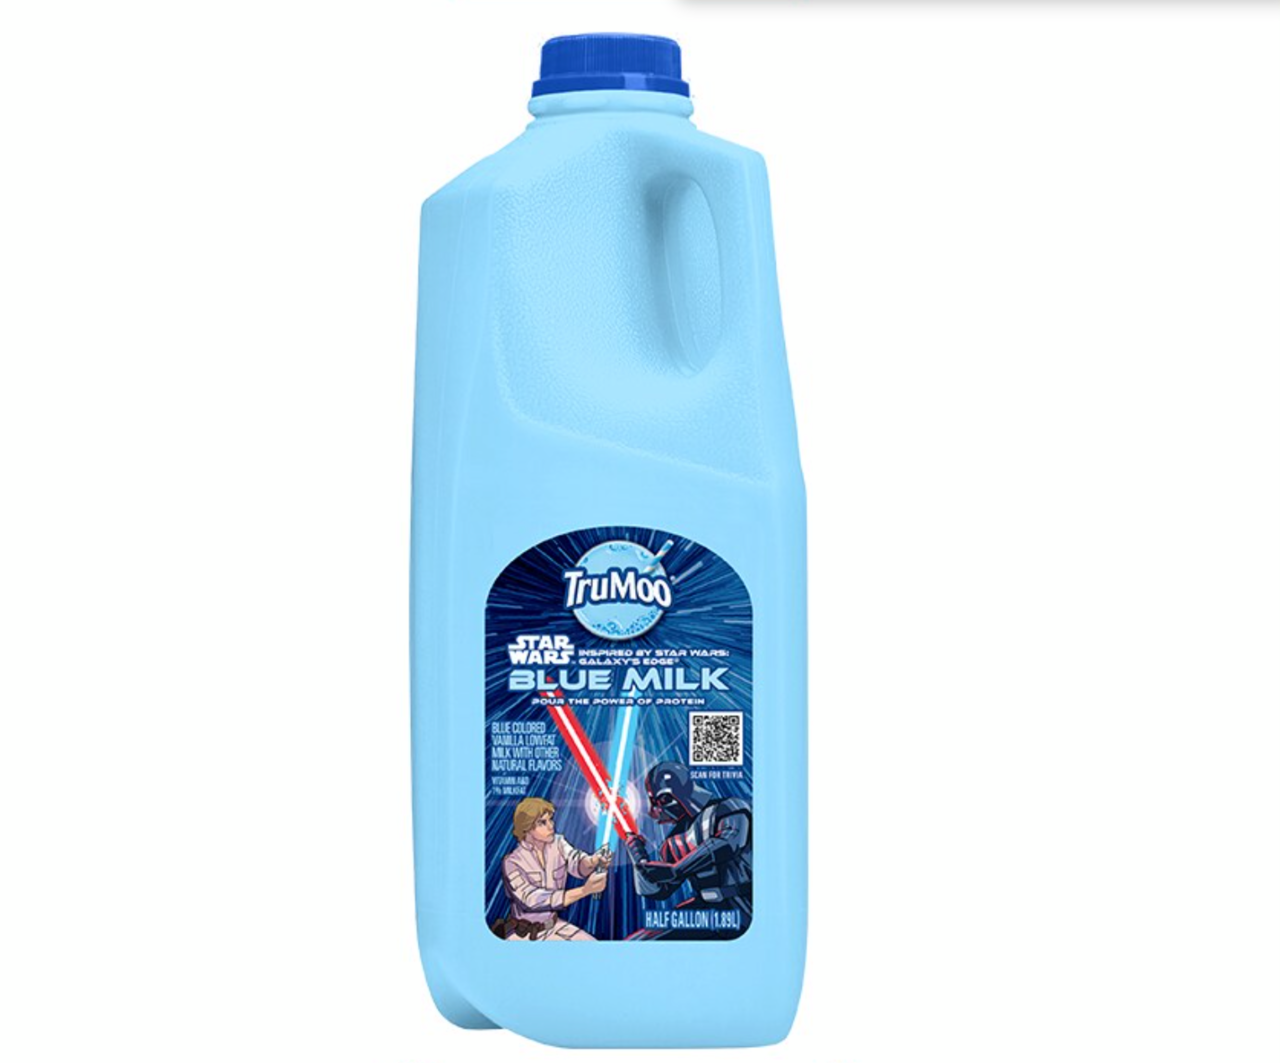 Blue Milk goes on sale soon